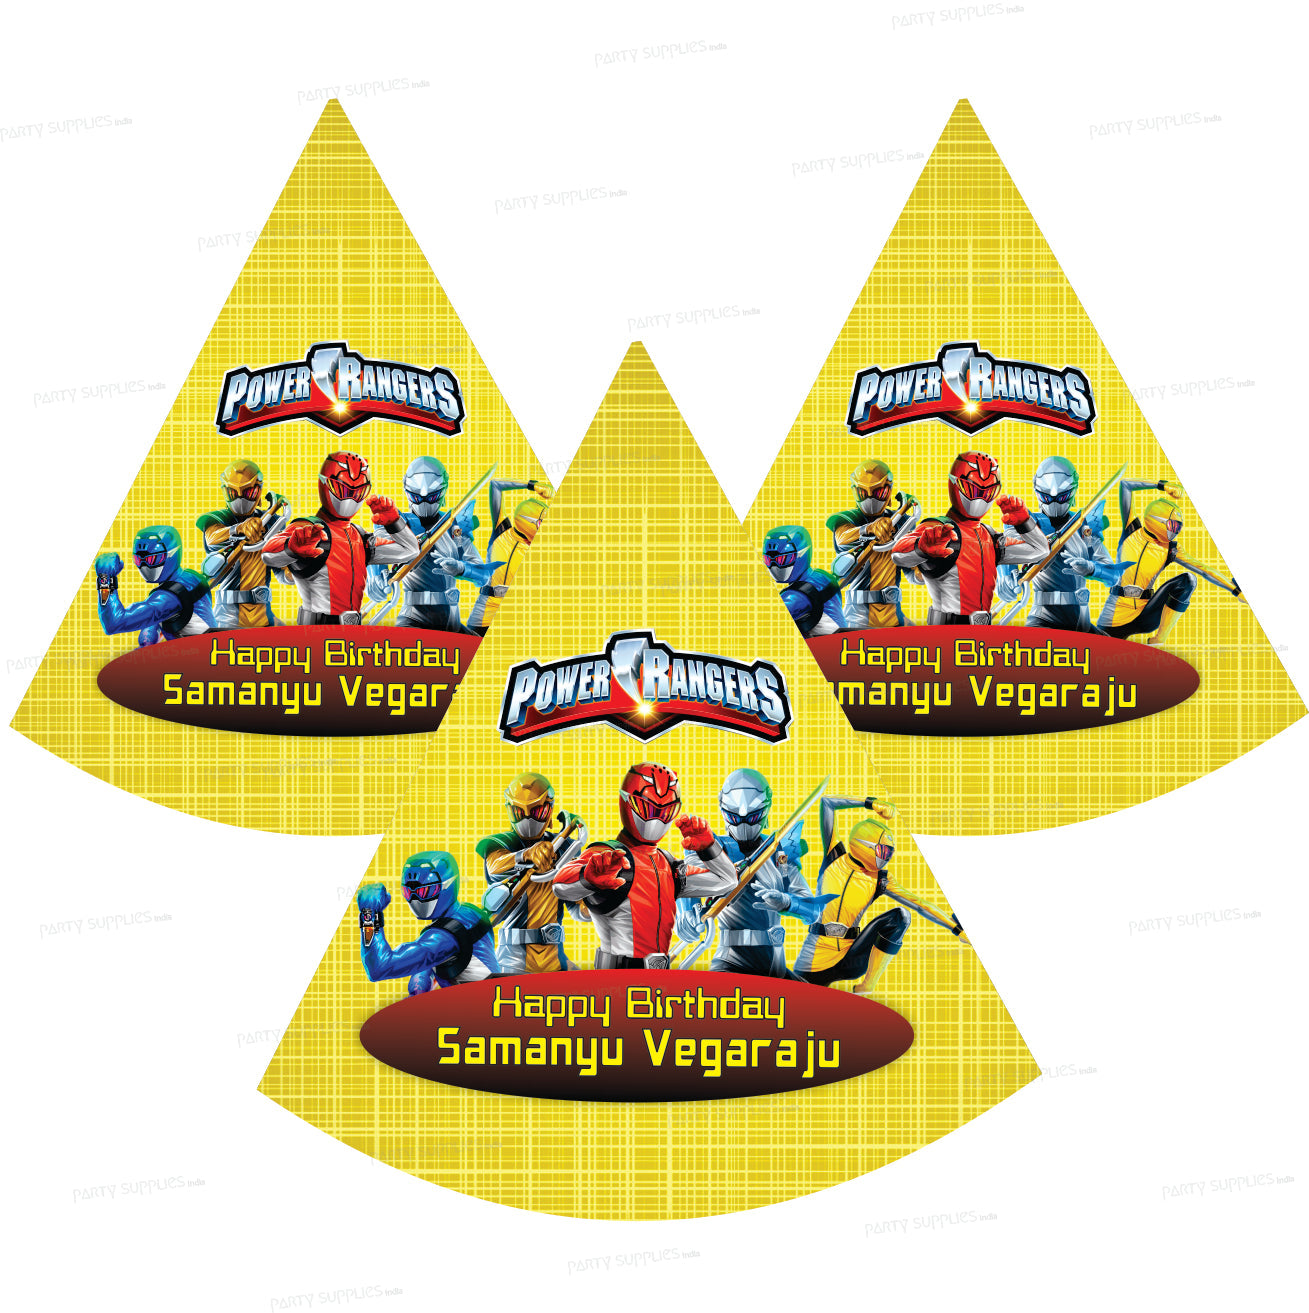 PSI Power Rangers Theme Classic Hat